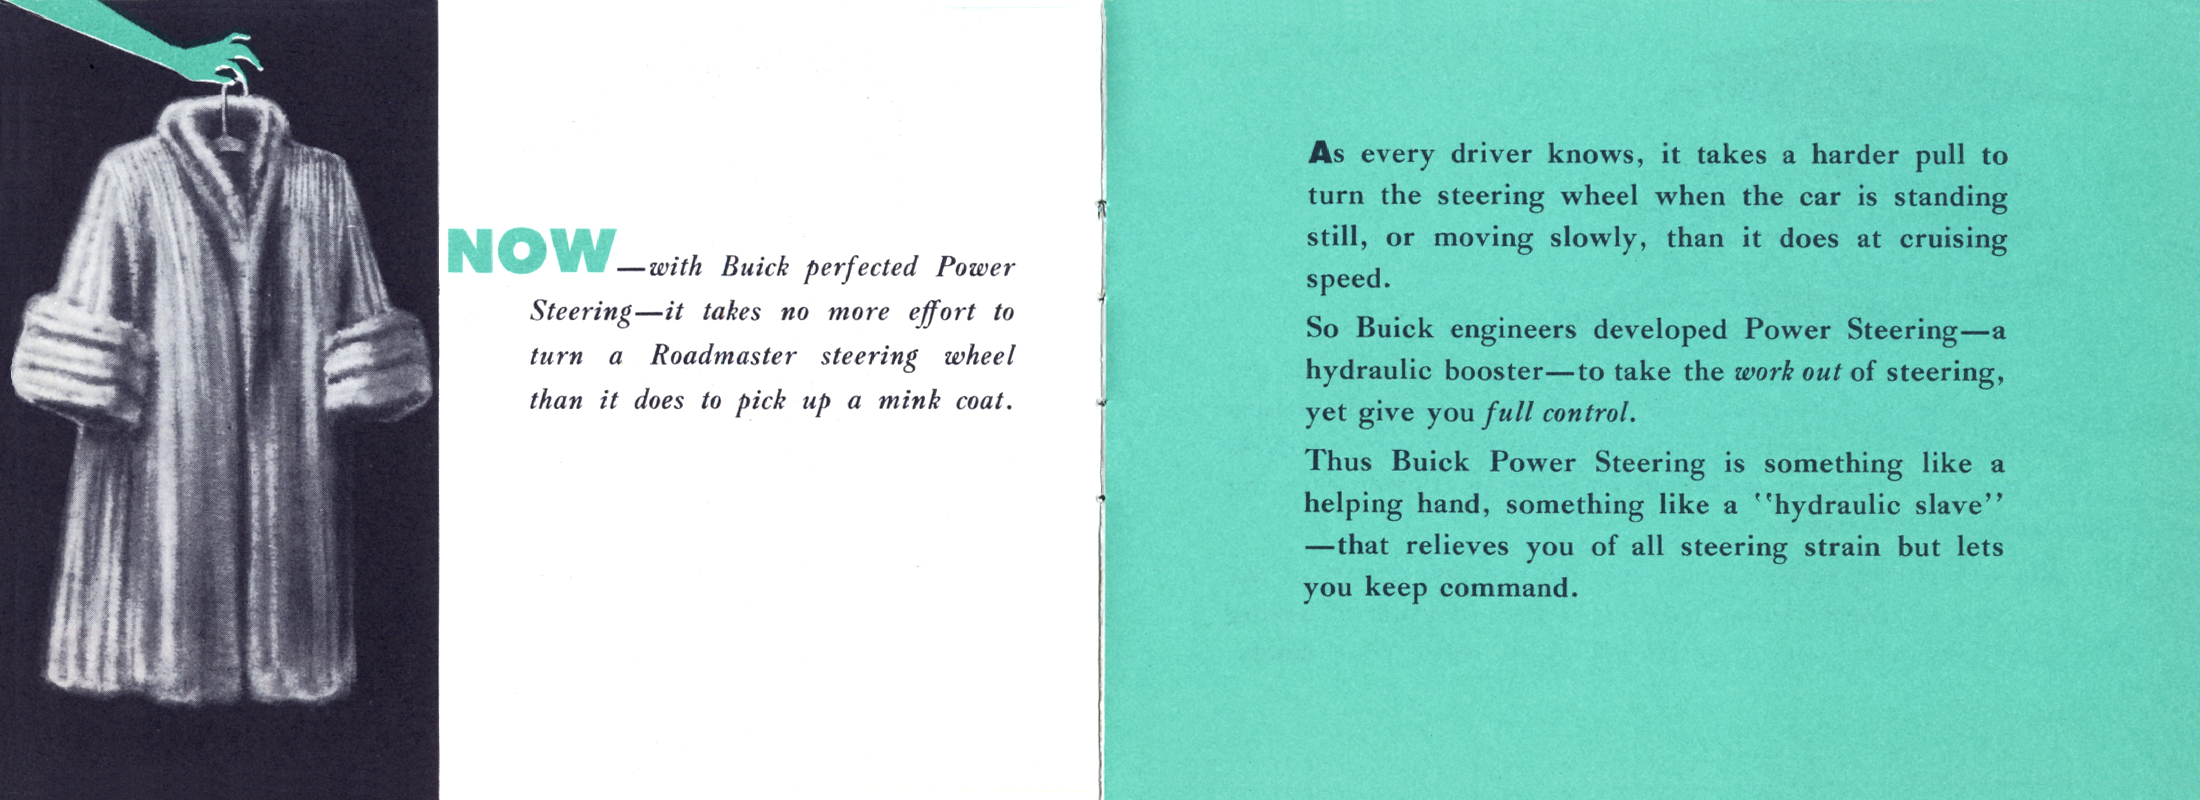 1952 Buick Power Steering Folder-02-03